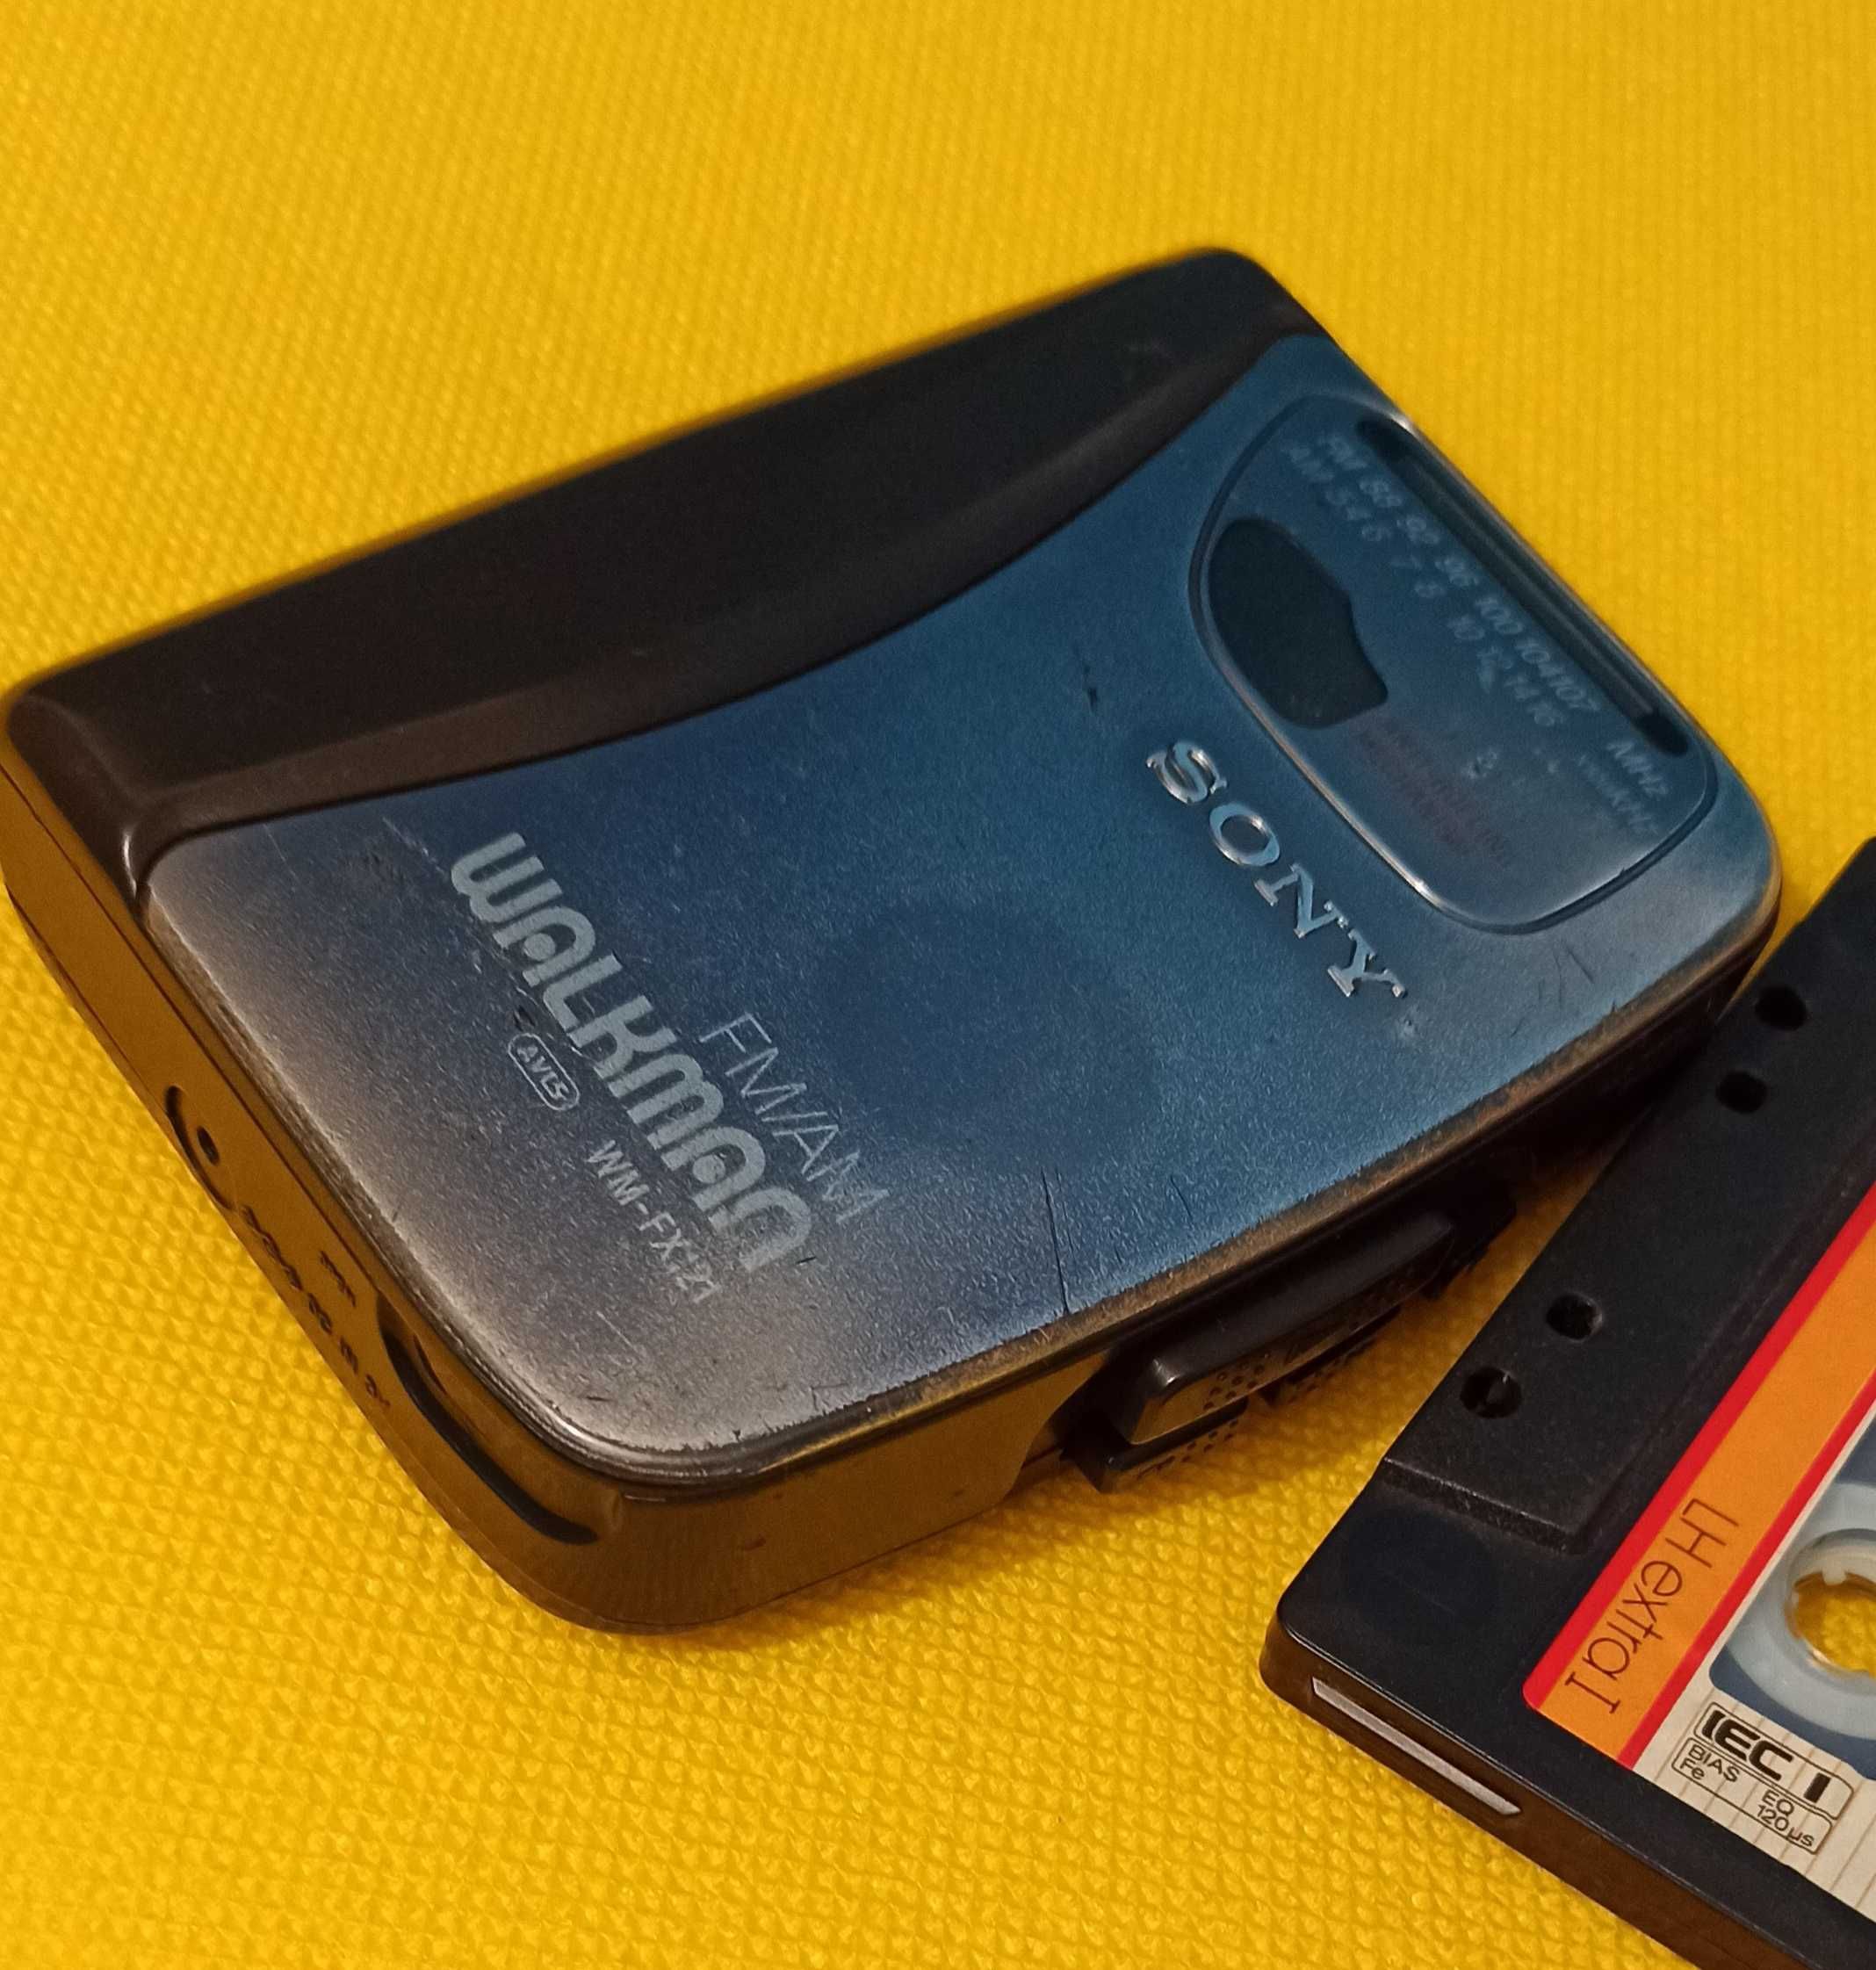 Плеер кассетный Sony Walkman WM-FX121